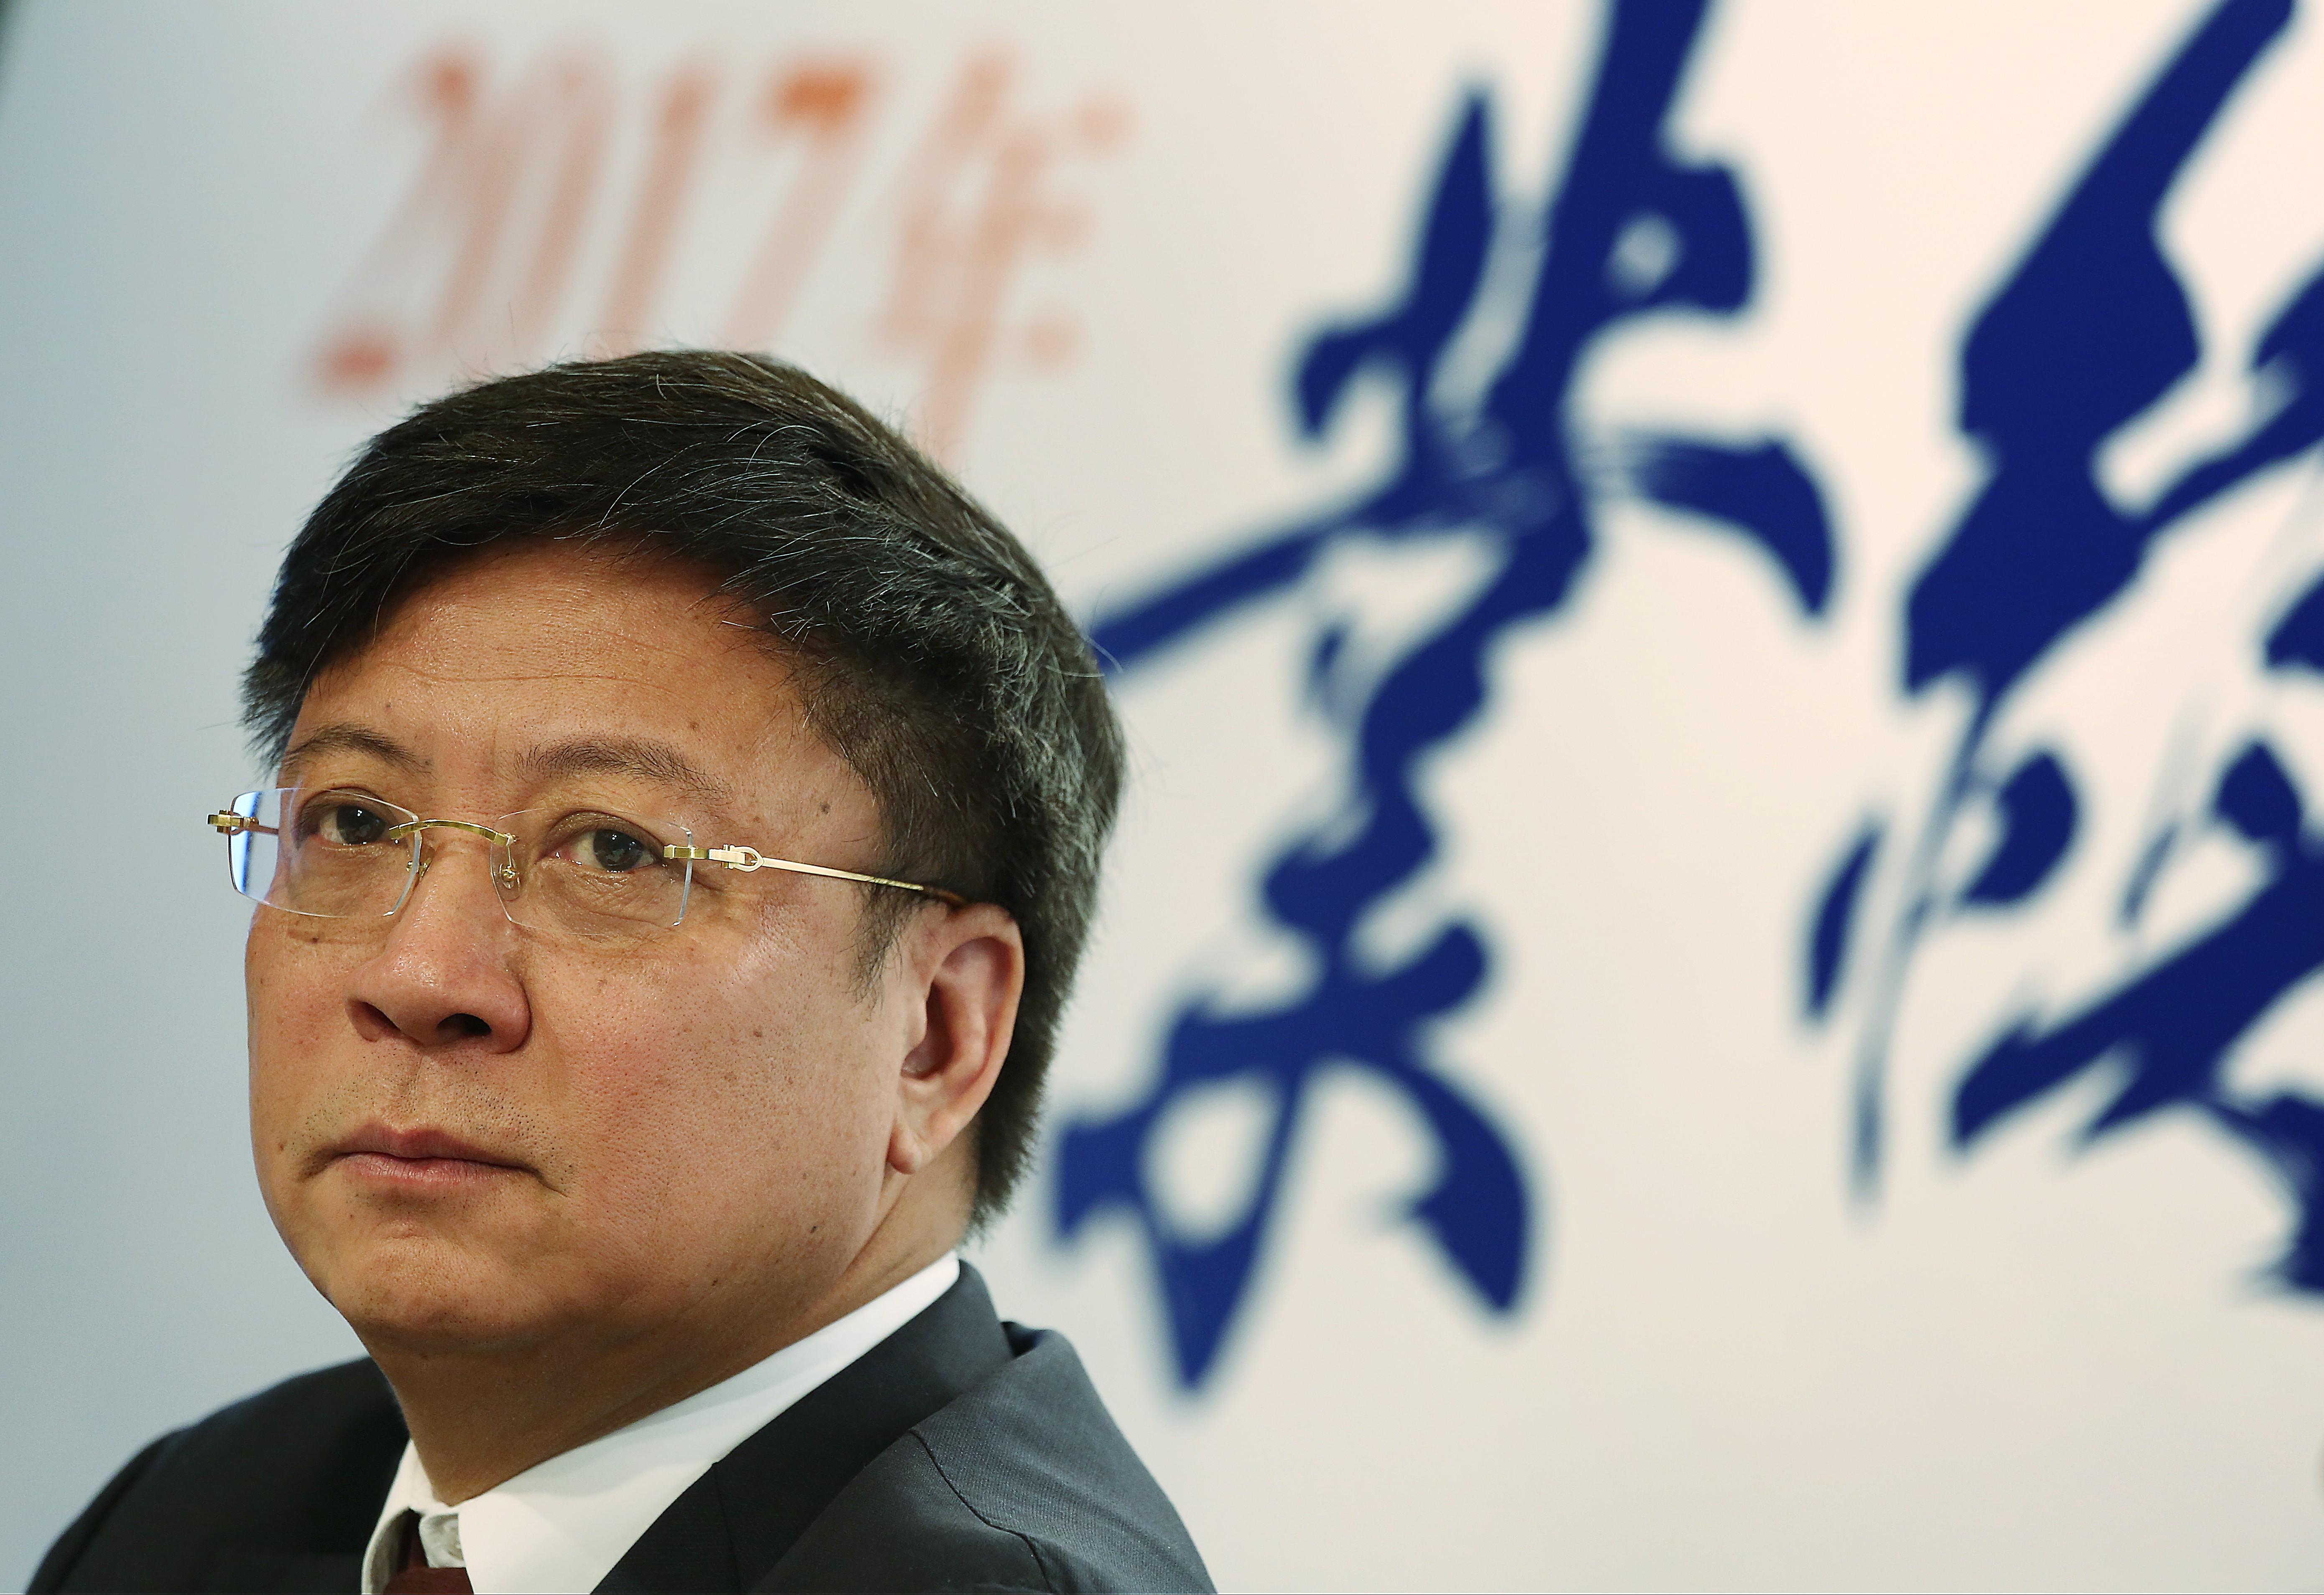 Sun Hongbin, founder and chairman of Sunac China, during the interim results press conference in Hong Kong. Photo: SCMP / Jonathan Wong